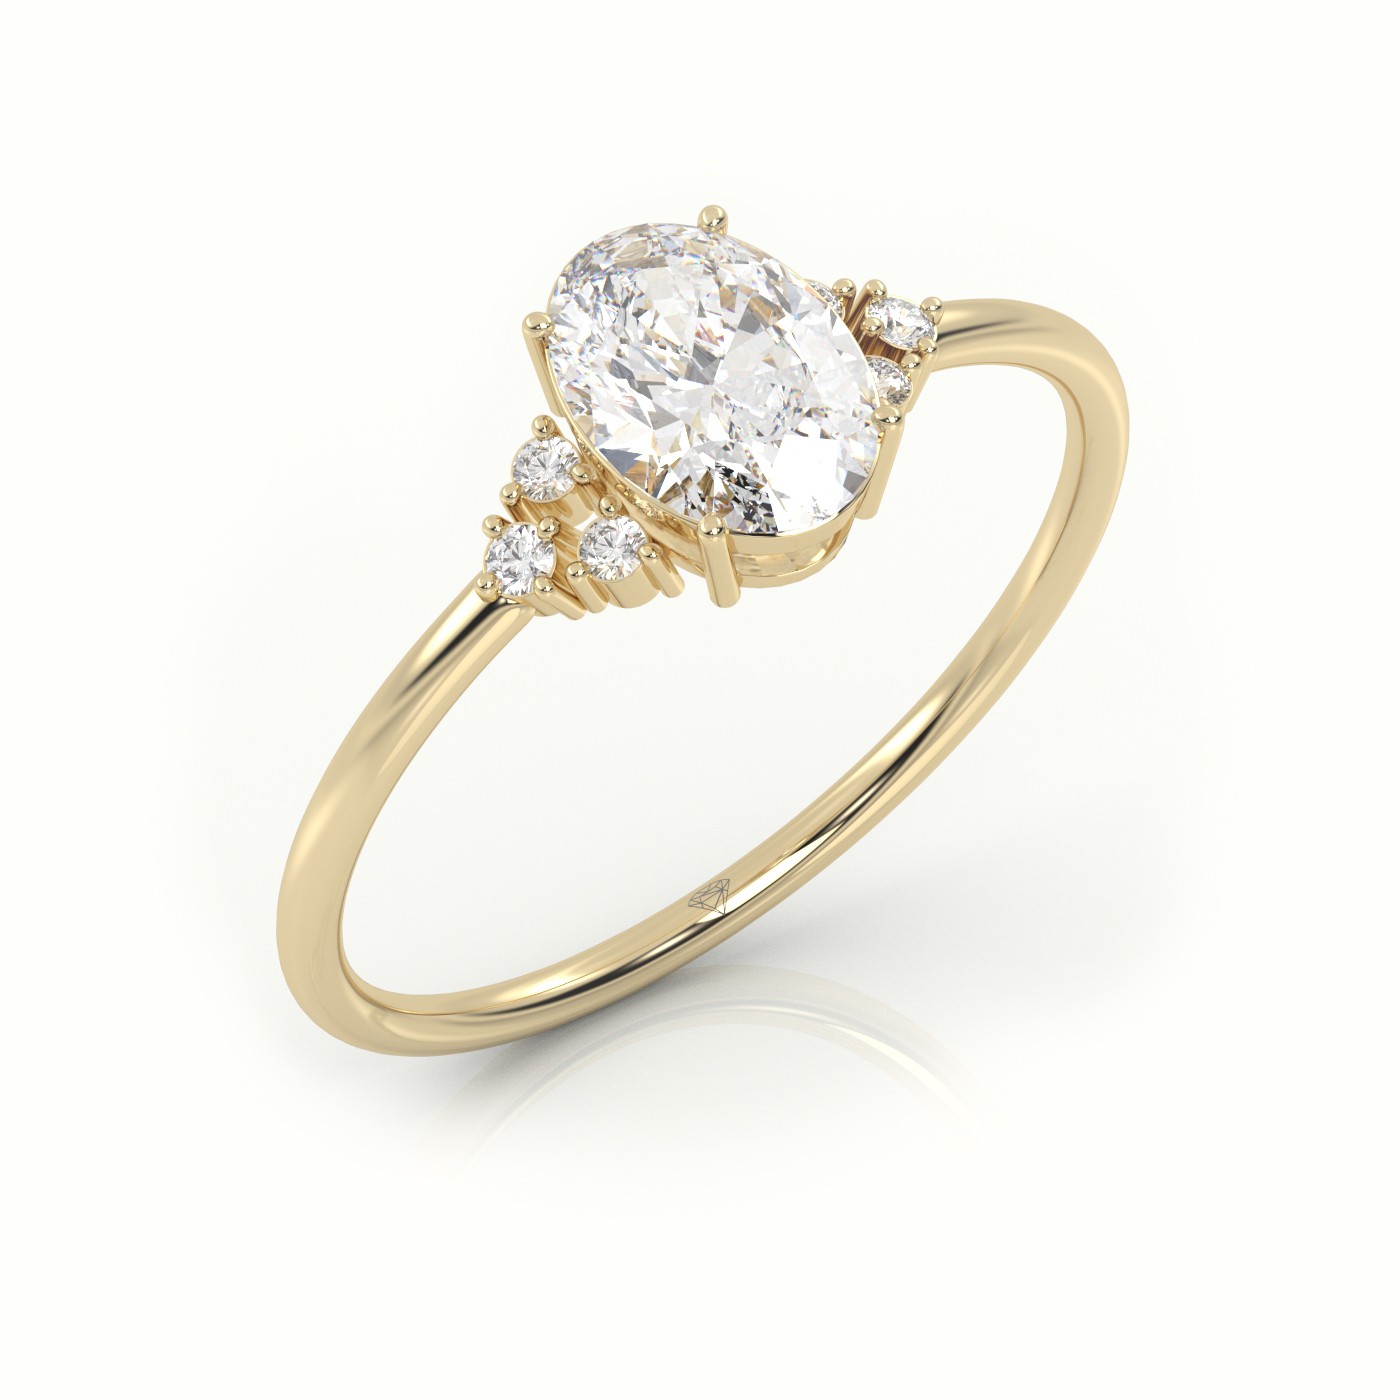 18K YELLOW GOLD OVAL CUT DIAMOND 4 PRONGS SIDE STONE DESIGNER RING